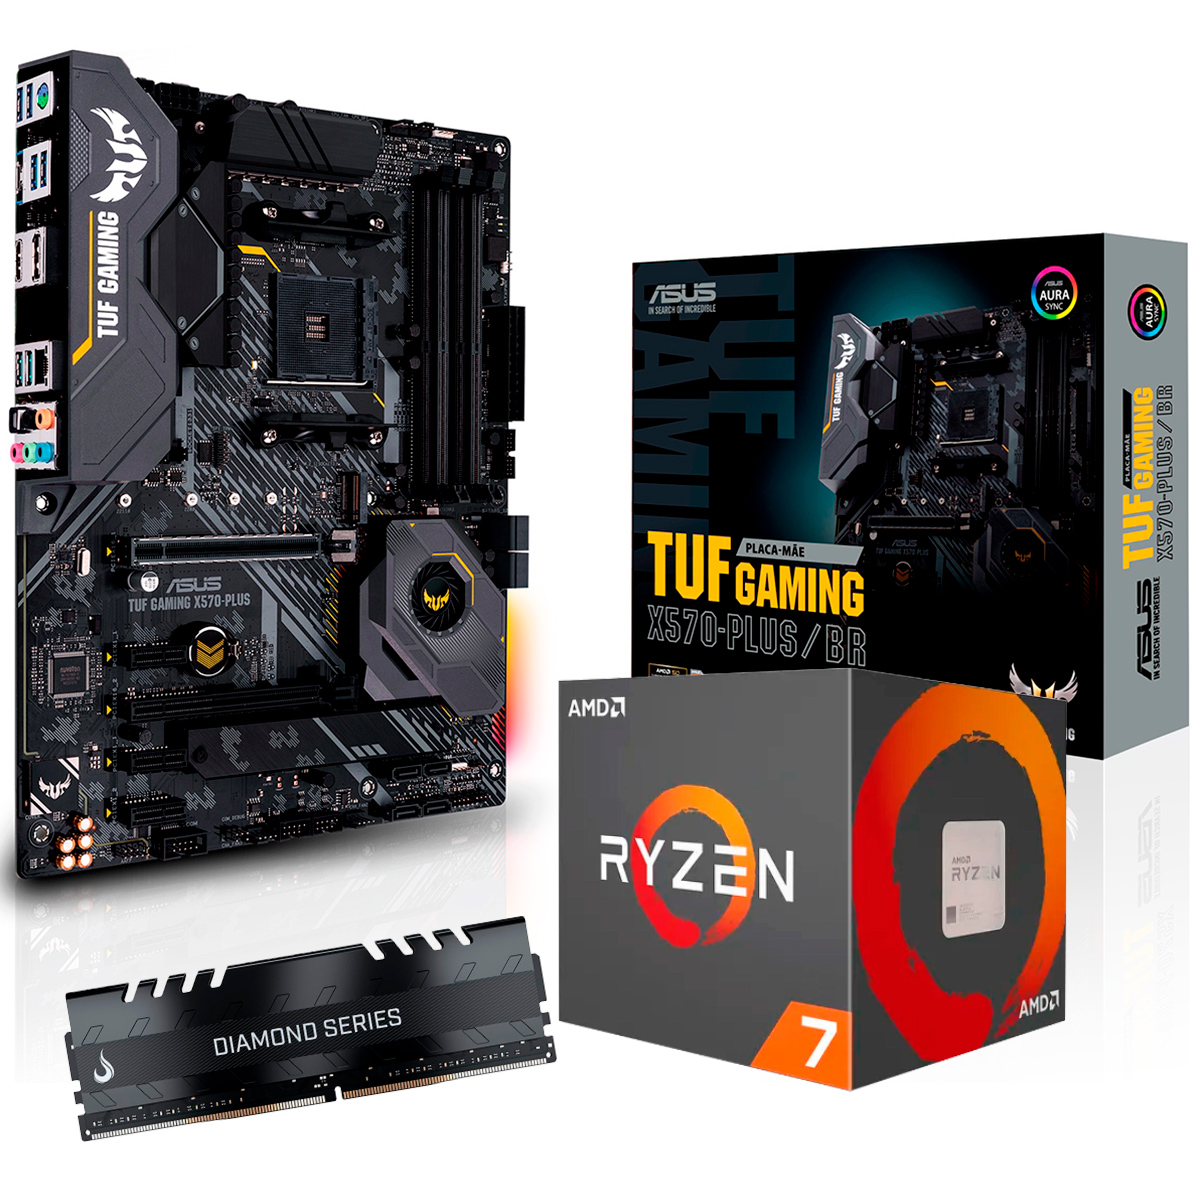 Kit Upgrade AMD Ryzen™ 7 2700X + Asus TUF GAMING X570 PLUS/BR + Memória 8GB DDR4